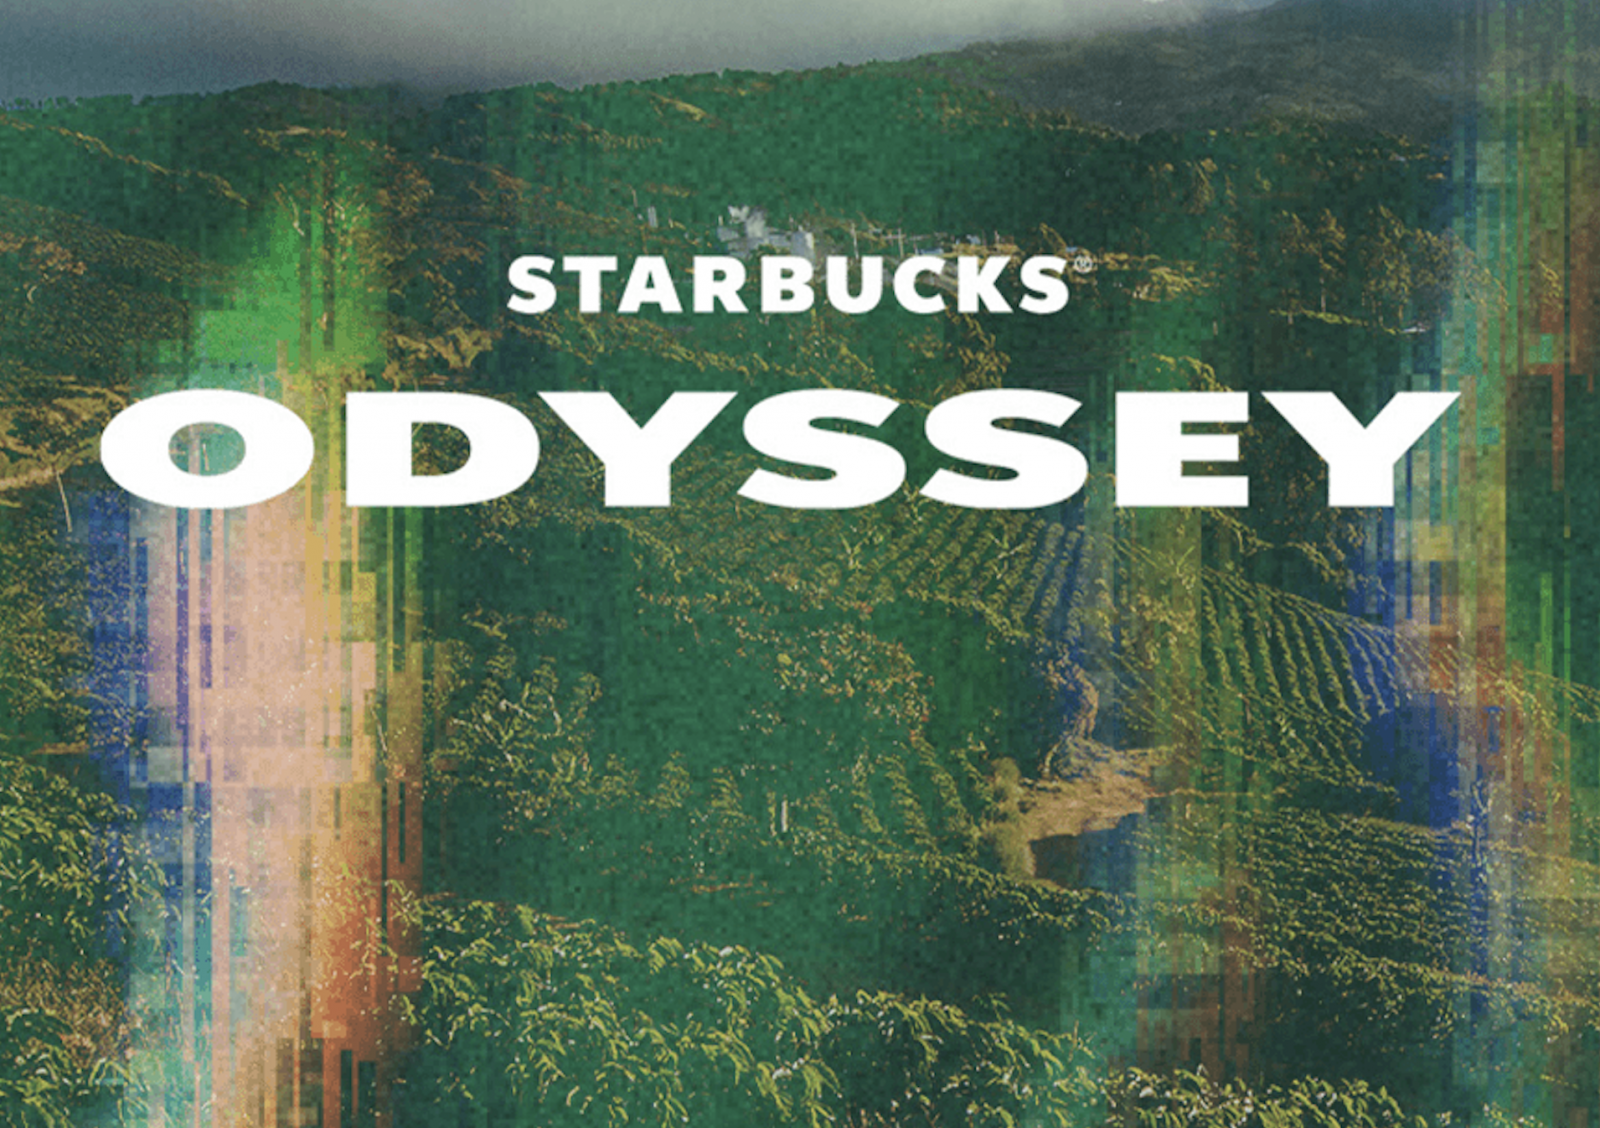 Starbucks Odyssey ad